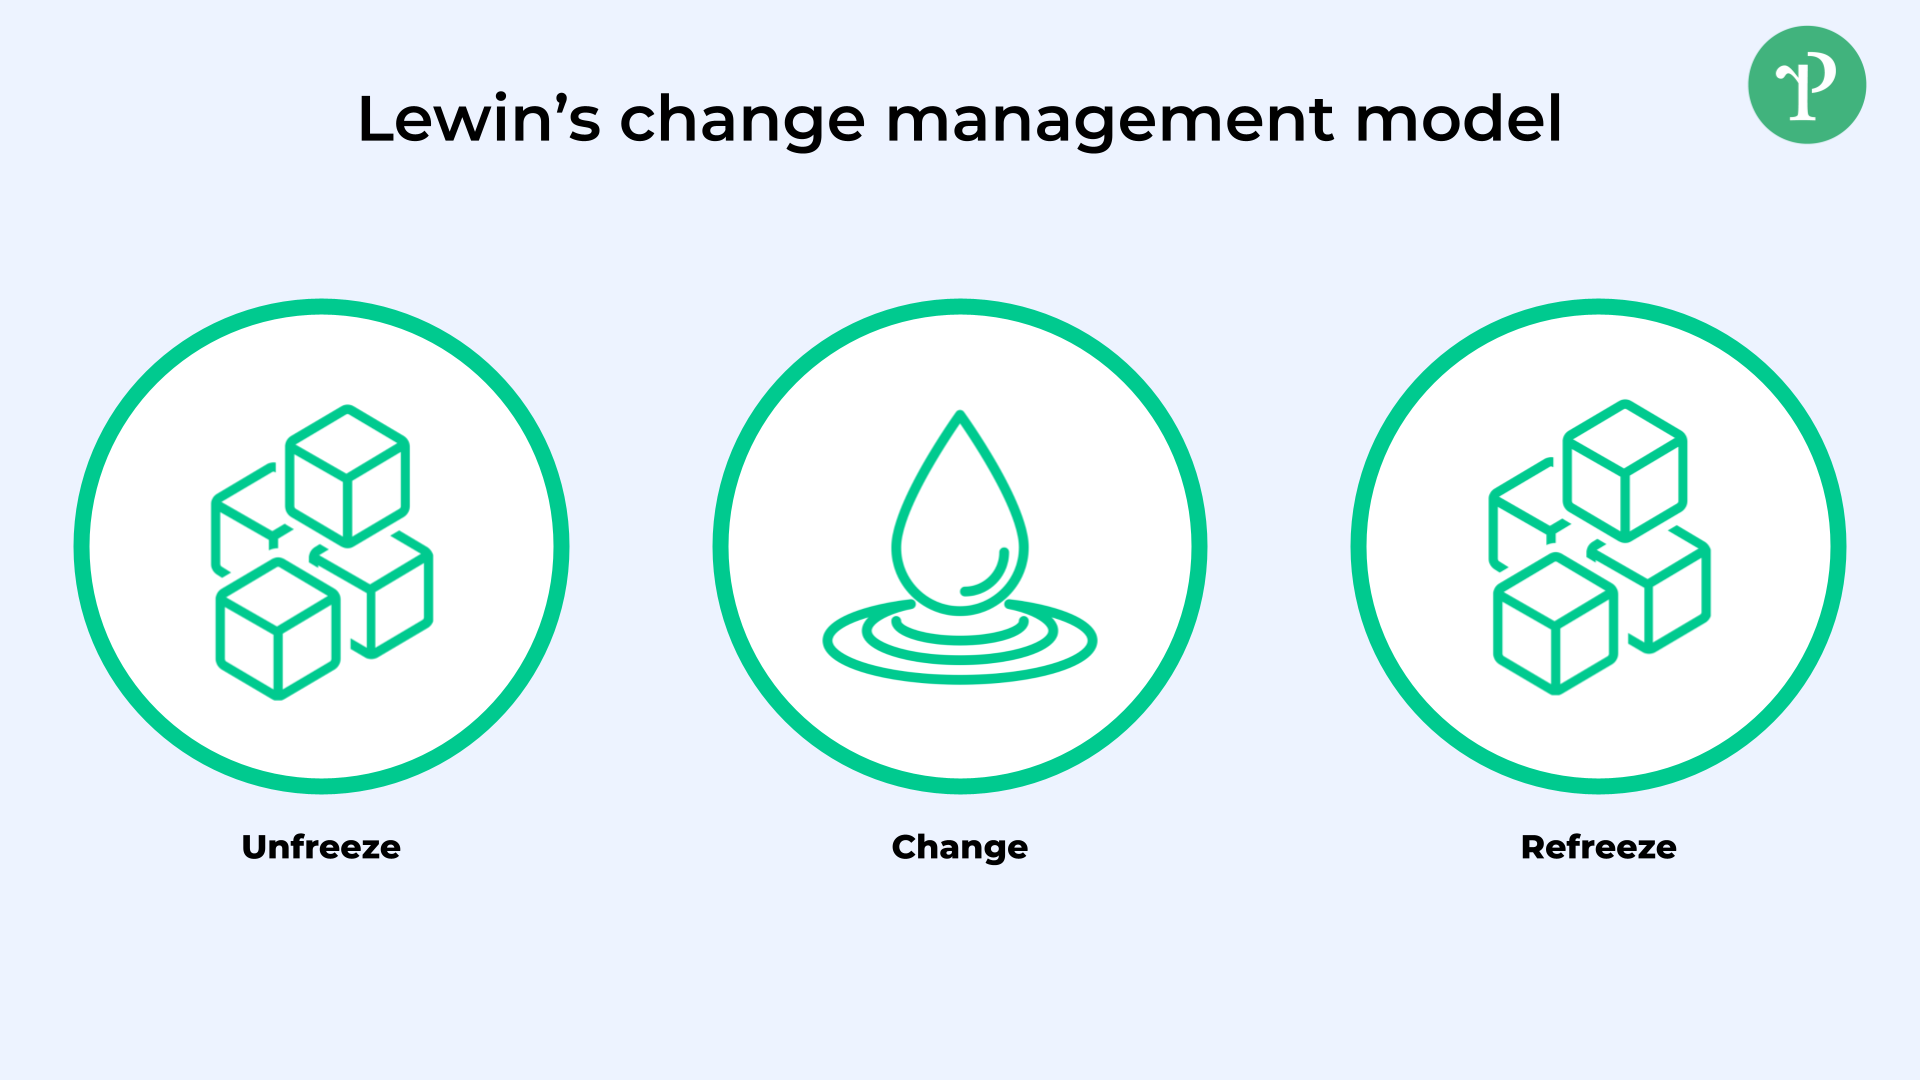 Lewins Modell des Veränderungsmanagements | Right People Group